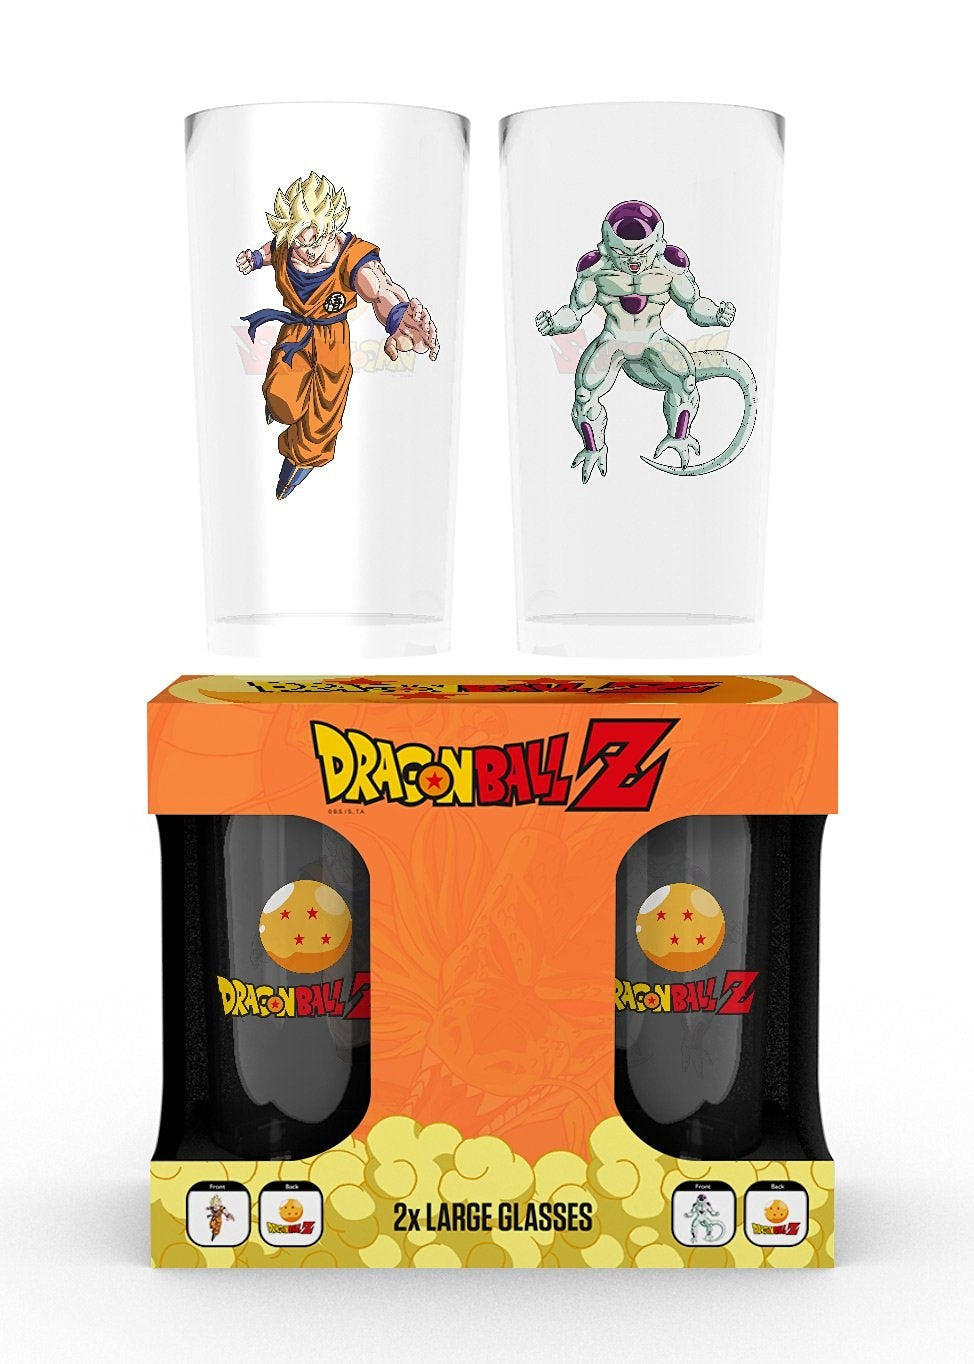 Dragon Ball Z Goku Vs. Frieza Large Glass Gift Set of 2